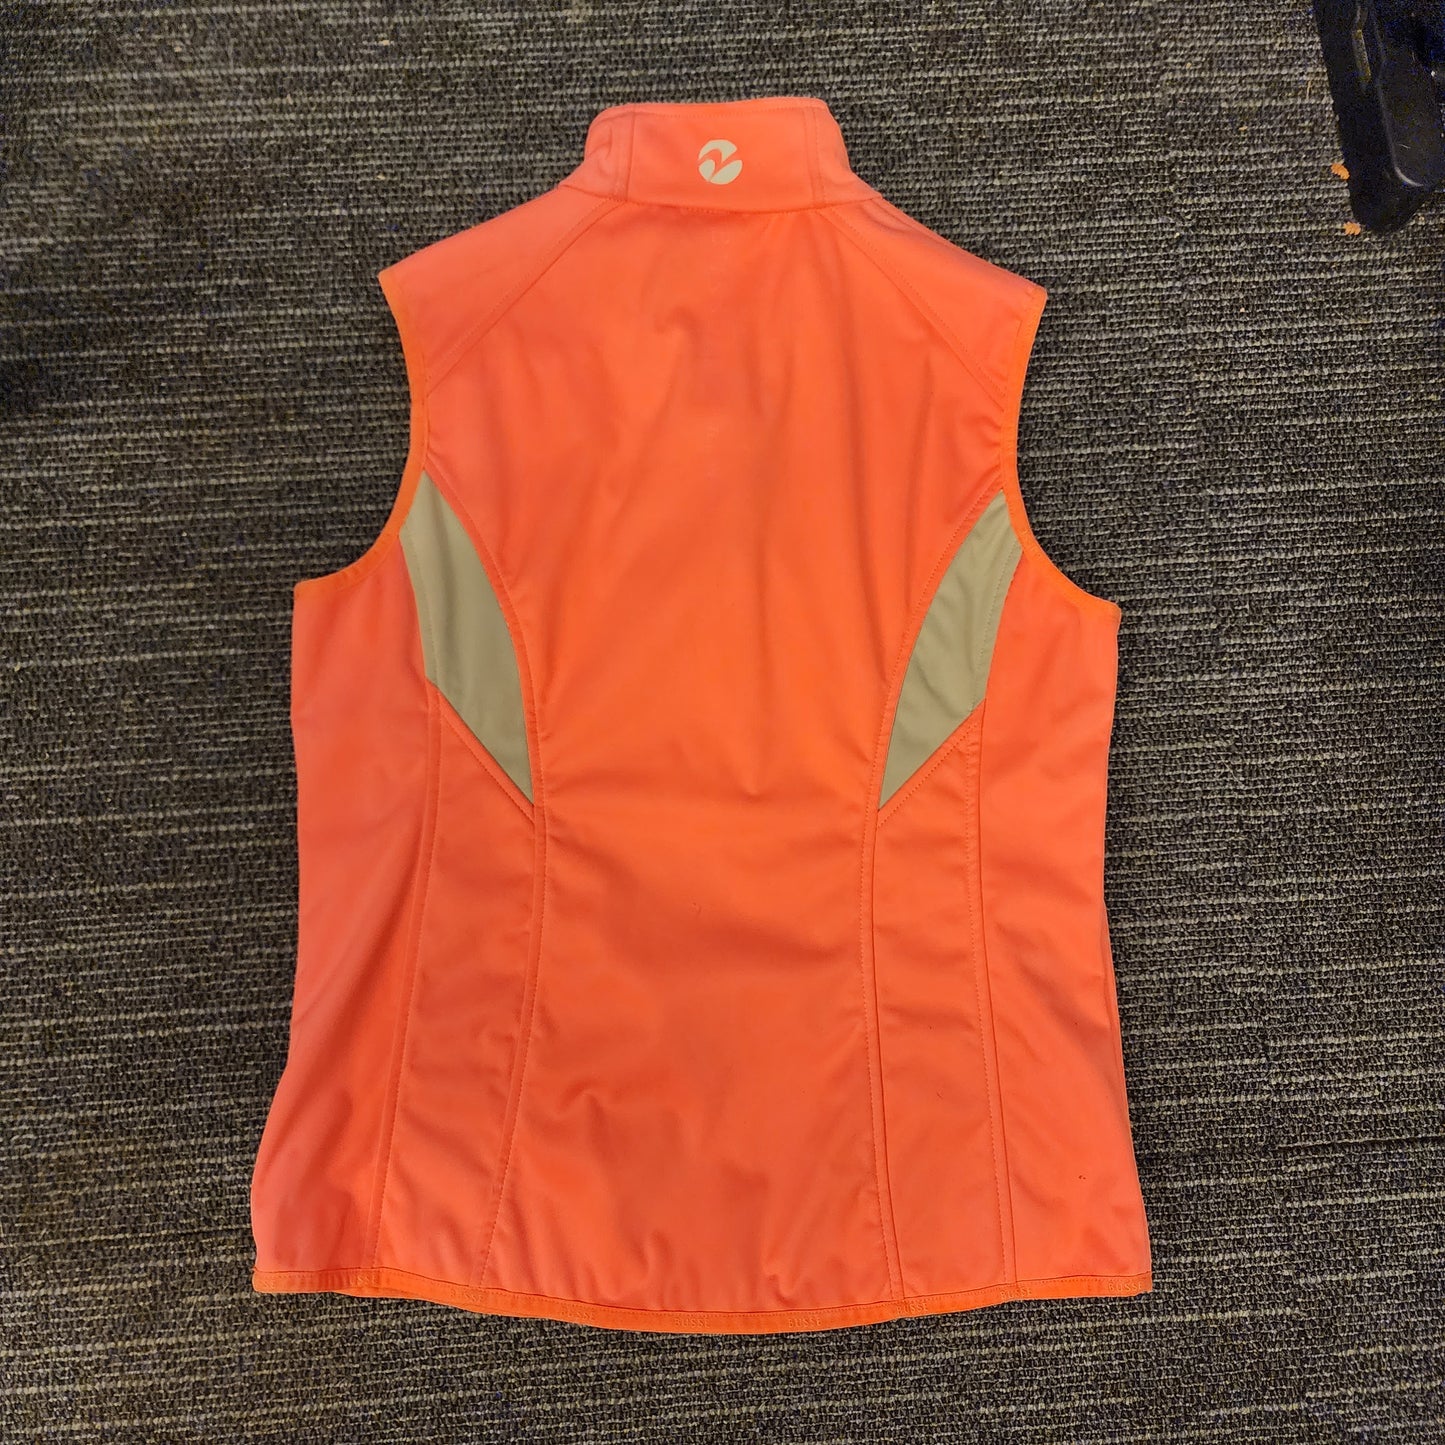 Busse orange softshell vest - brand new